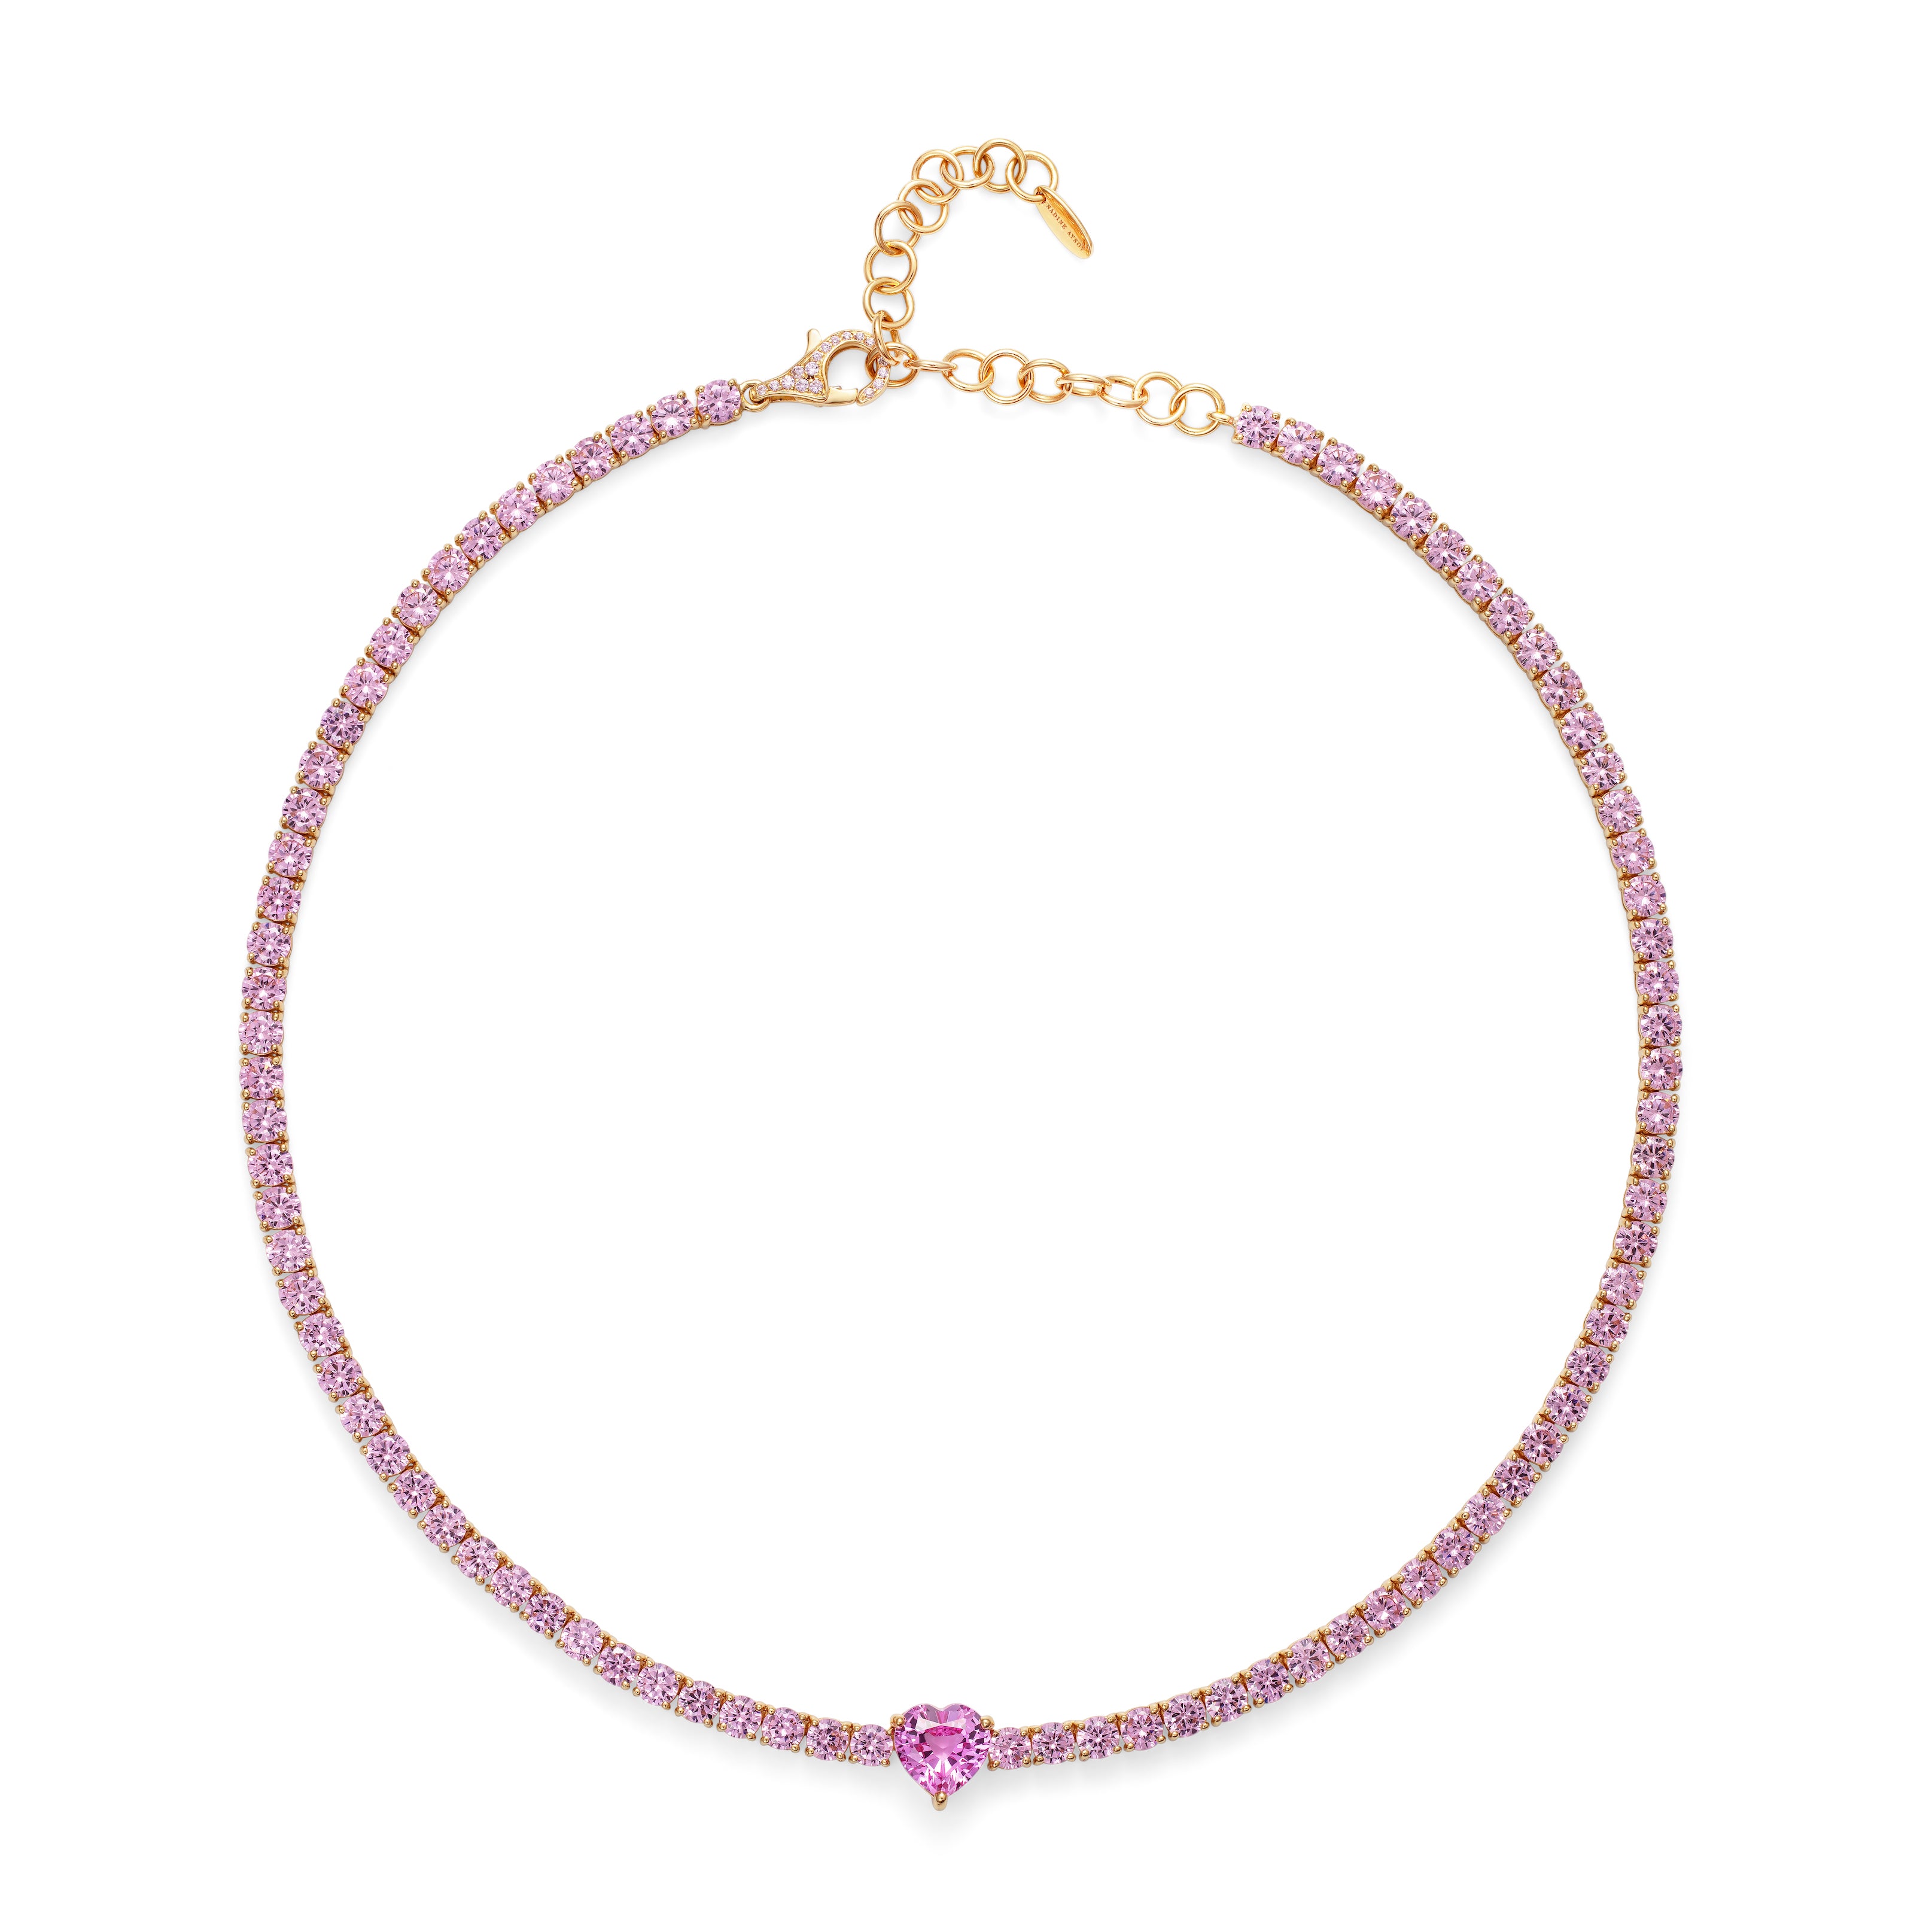 Pink Sapphire Pendant Pink Sapphire Necklace Heart Shape 